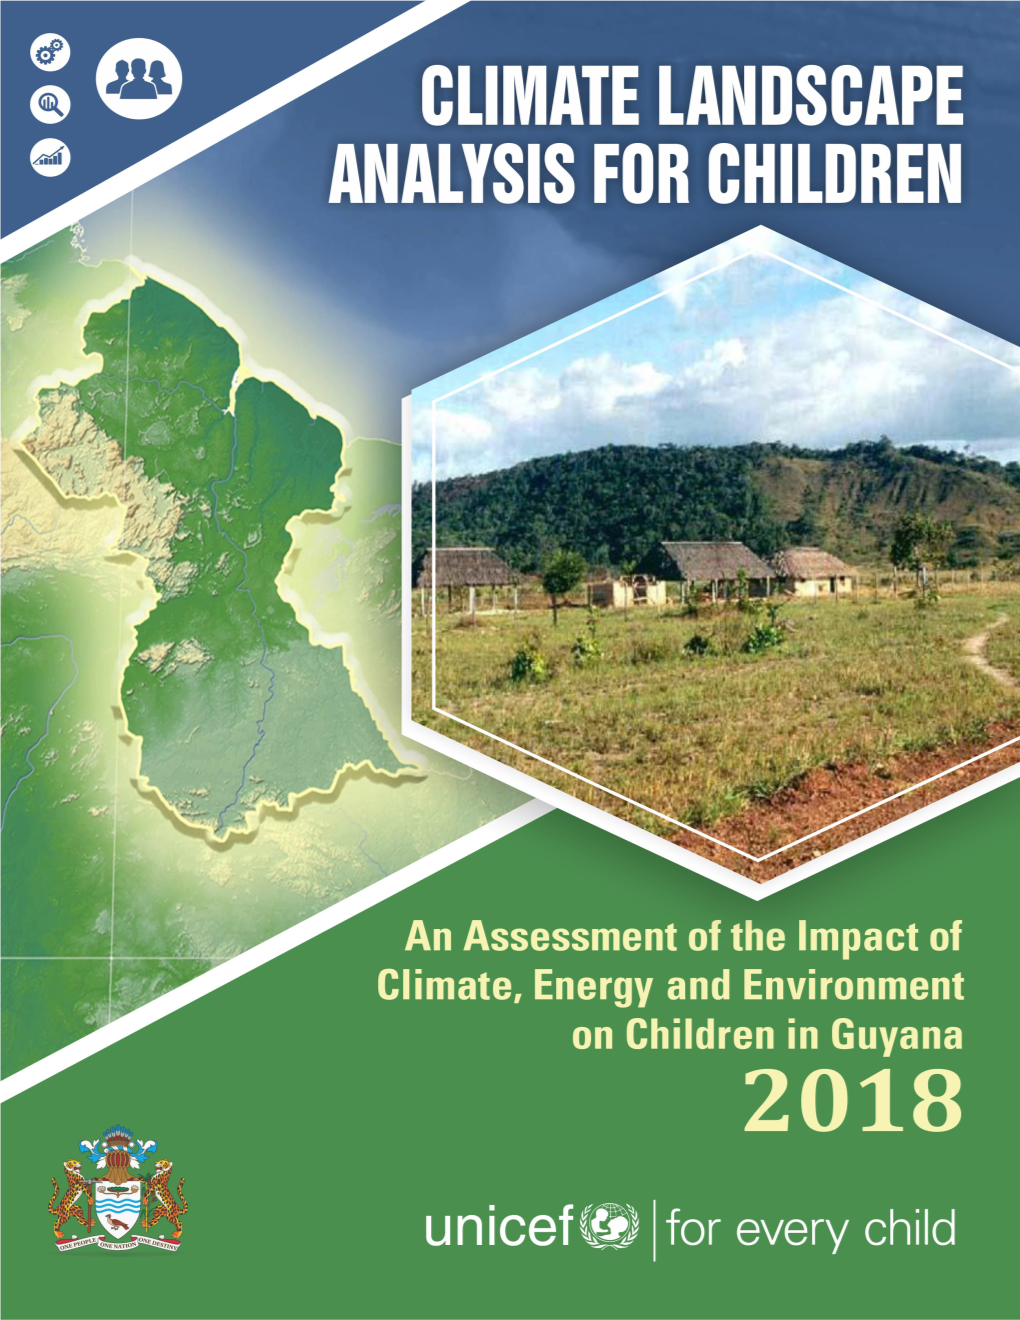 PDF Guyana Climate Landscape Analysis for Children.Pdf